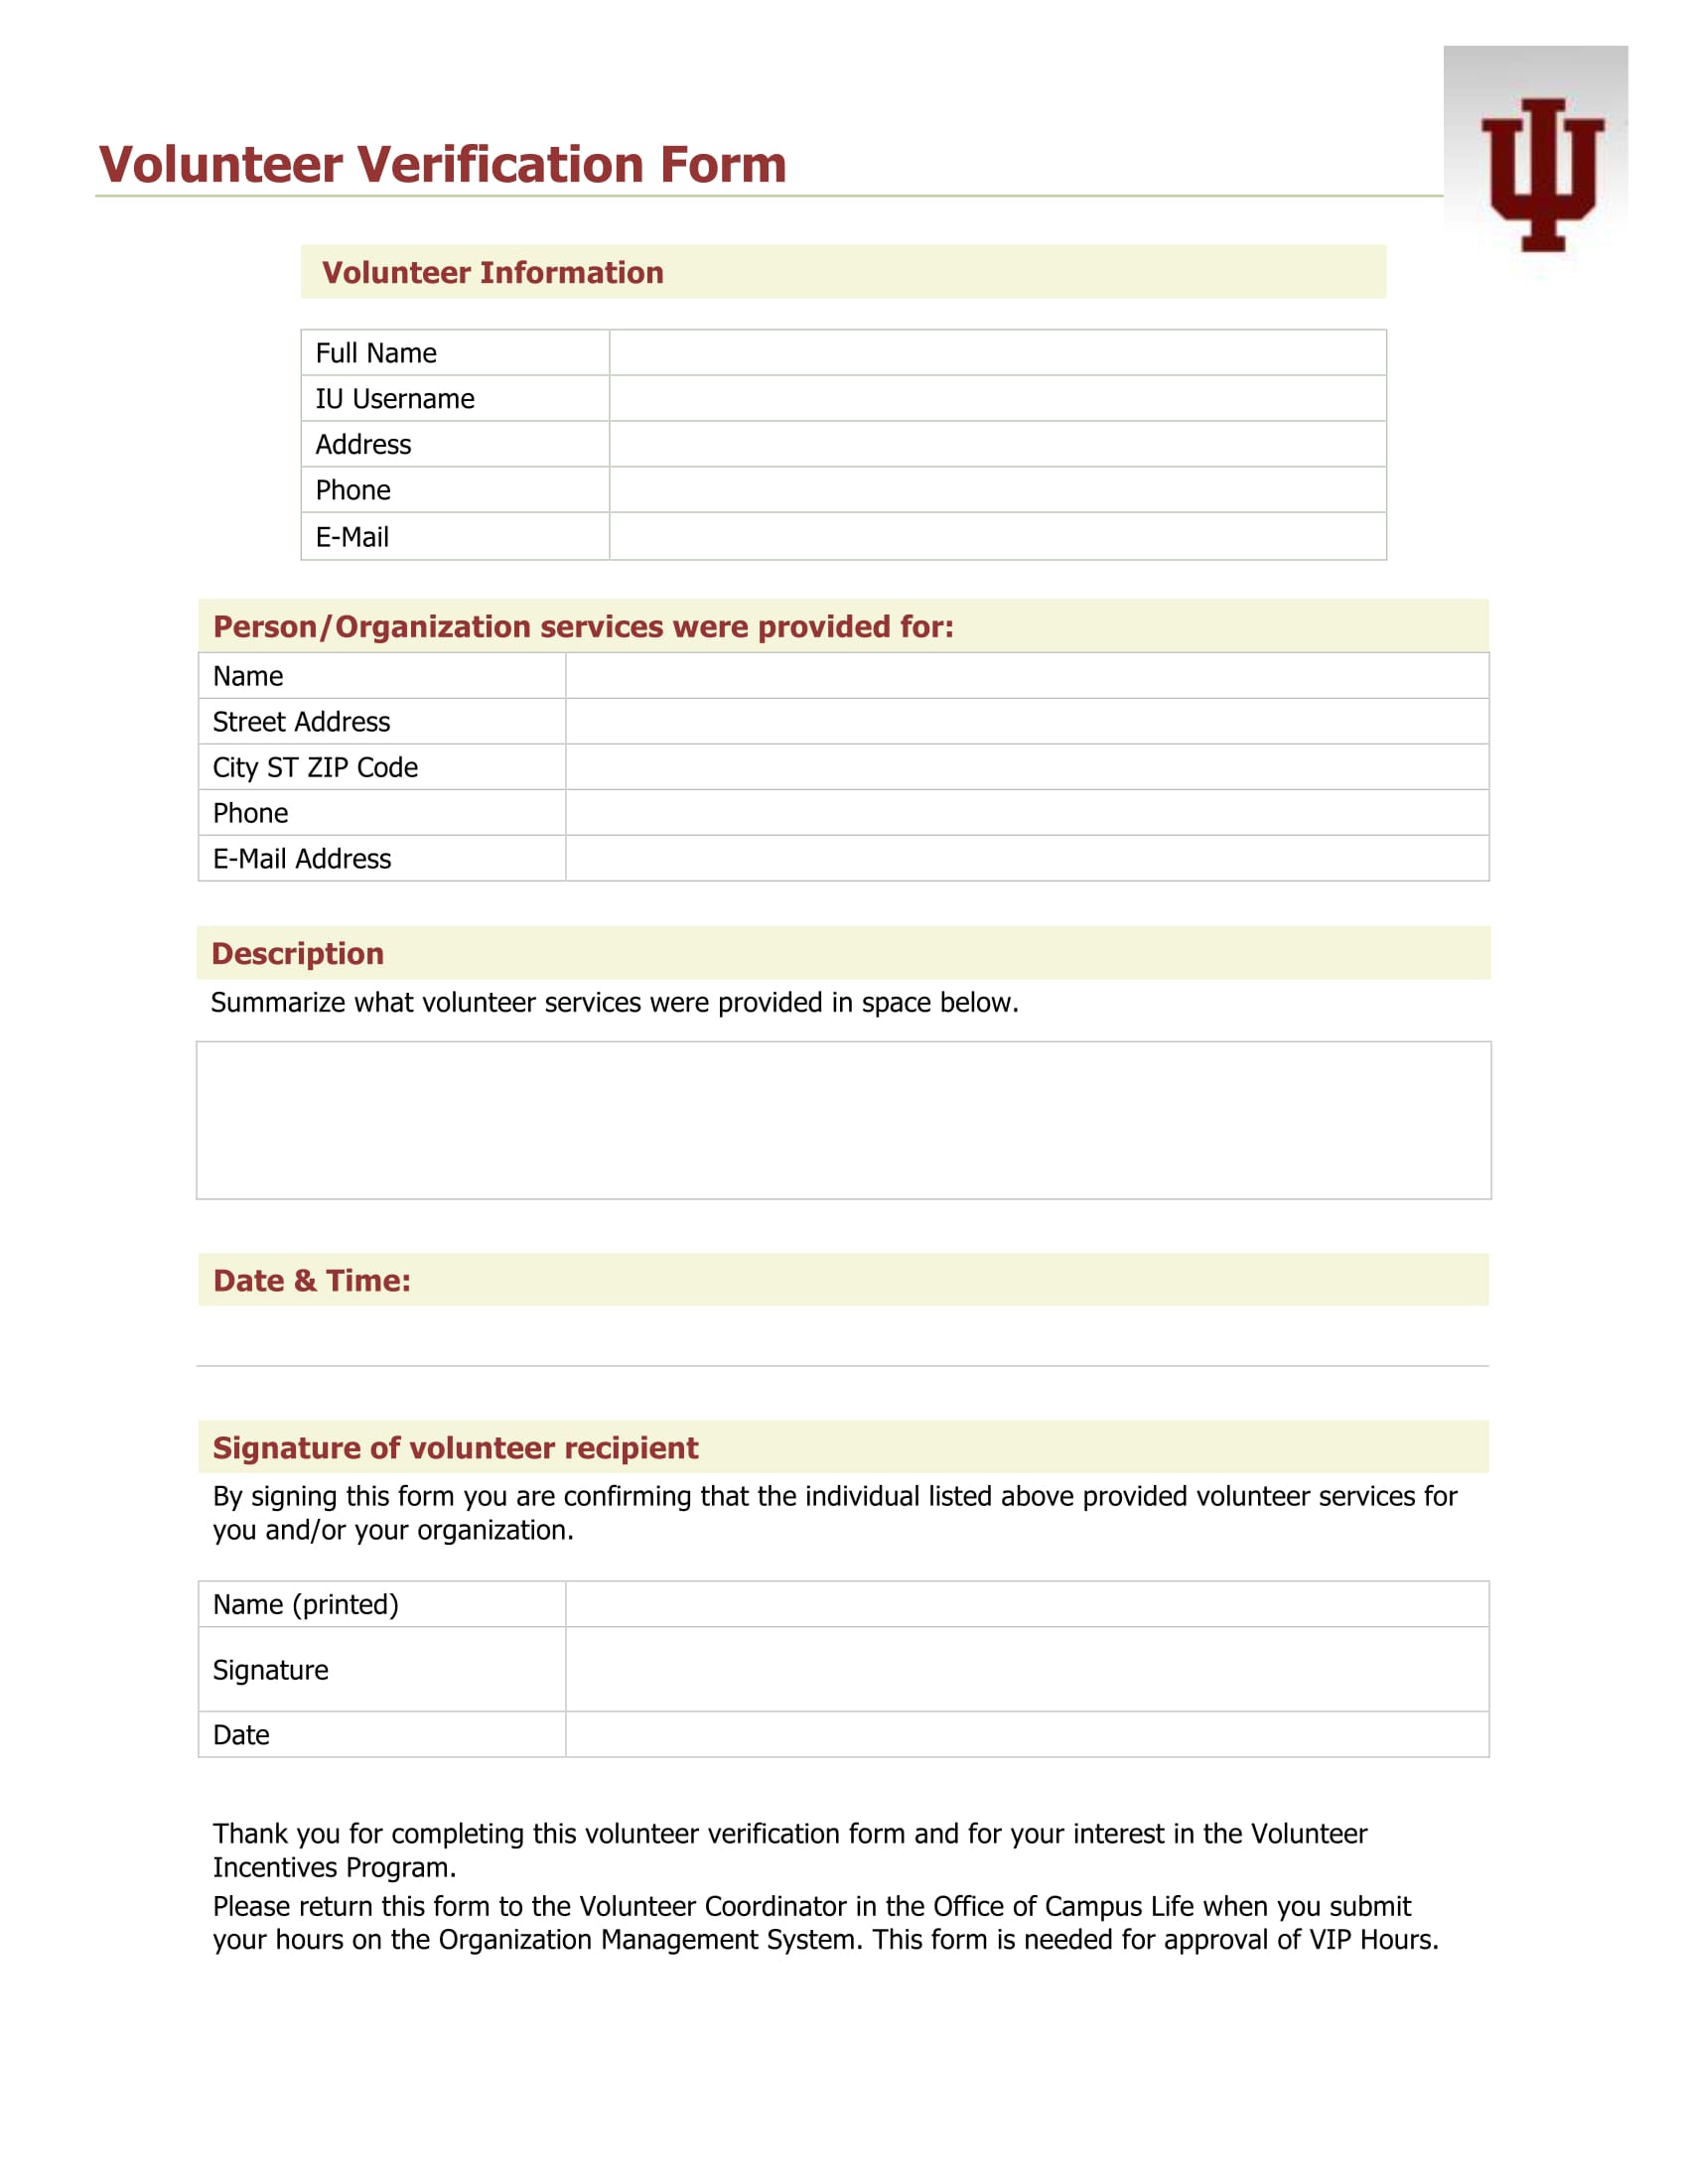 university volunteer verification form 1